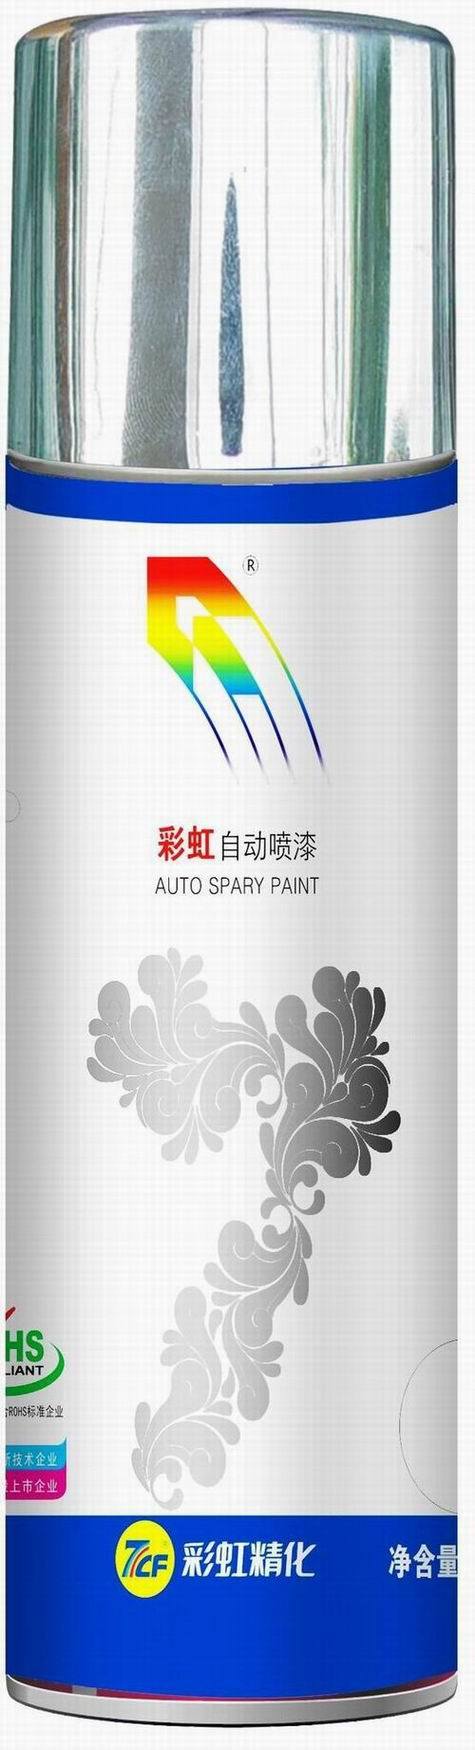 Silver Spray Paint